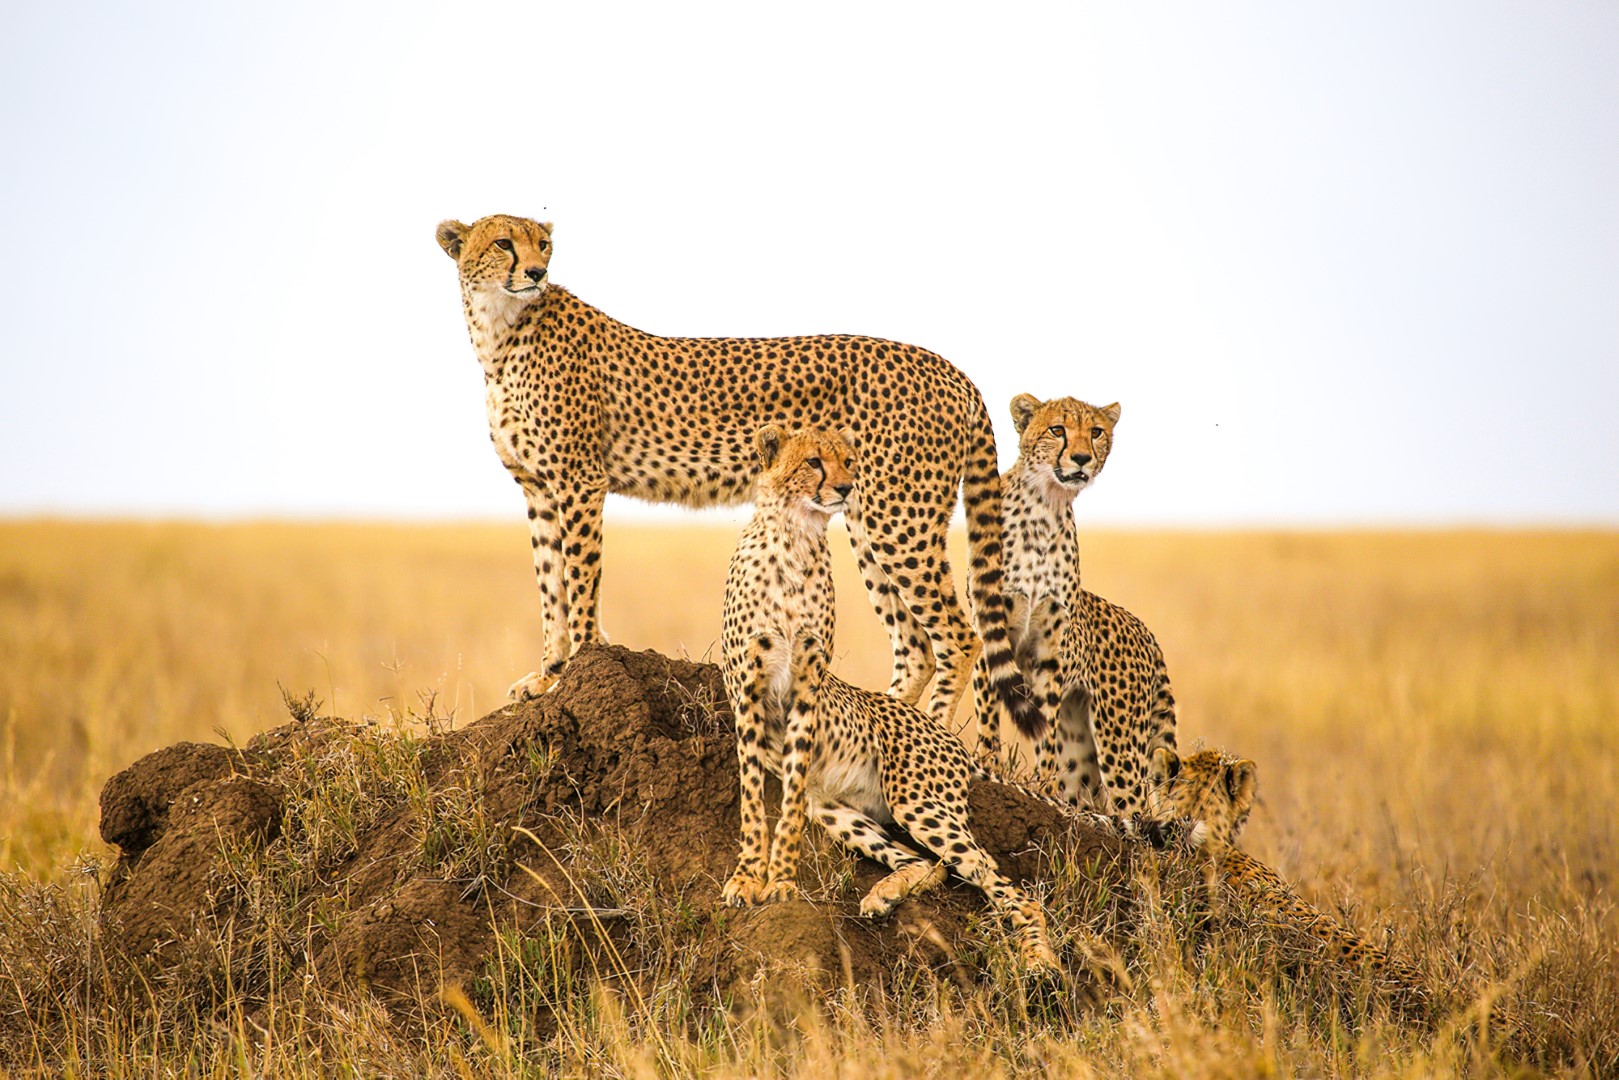 Tanzania Safari in the Serengeti National Park